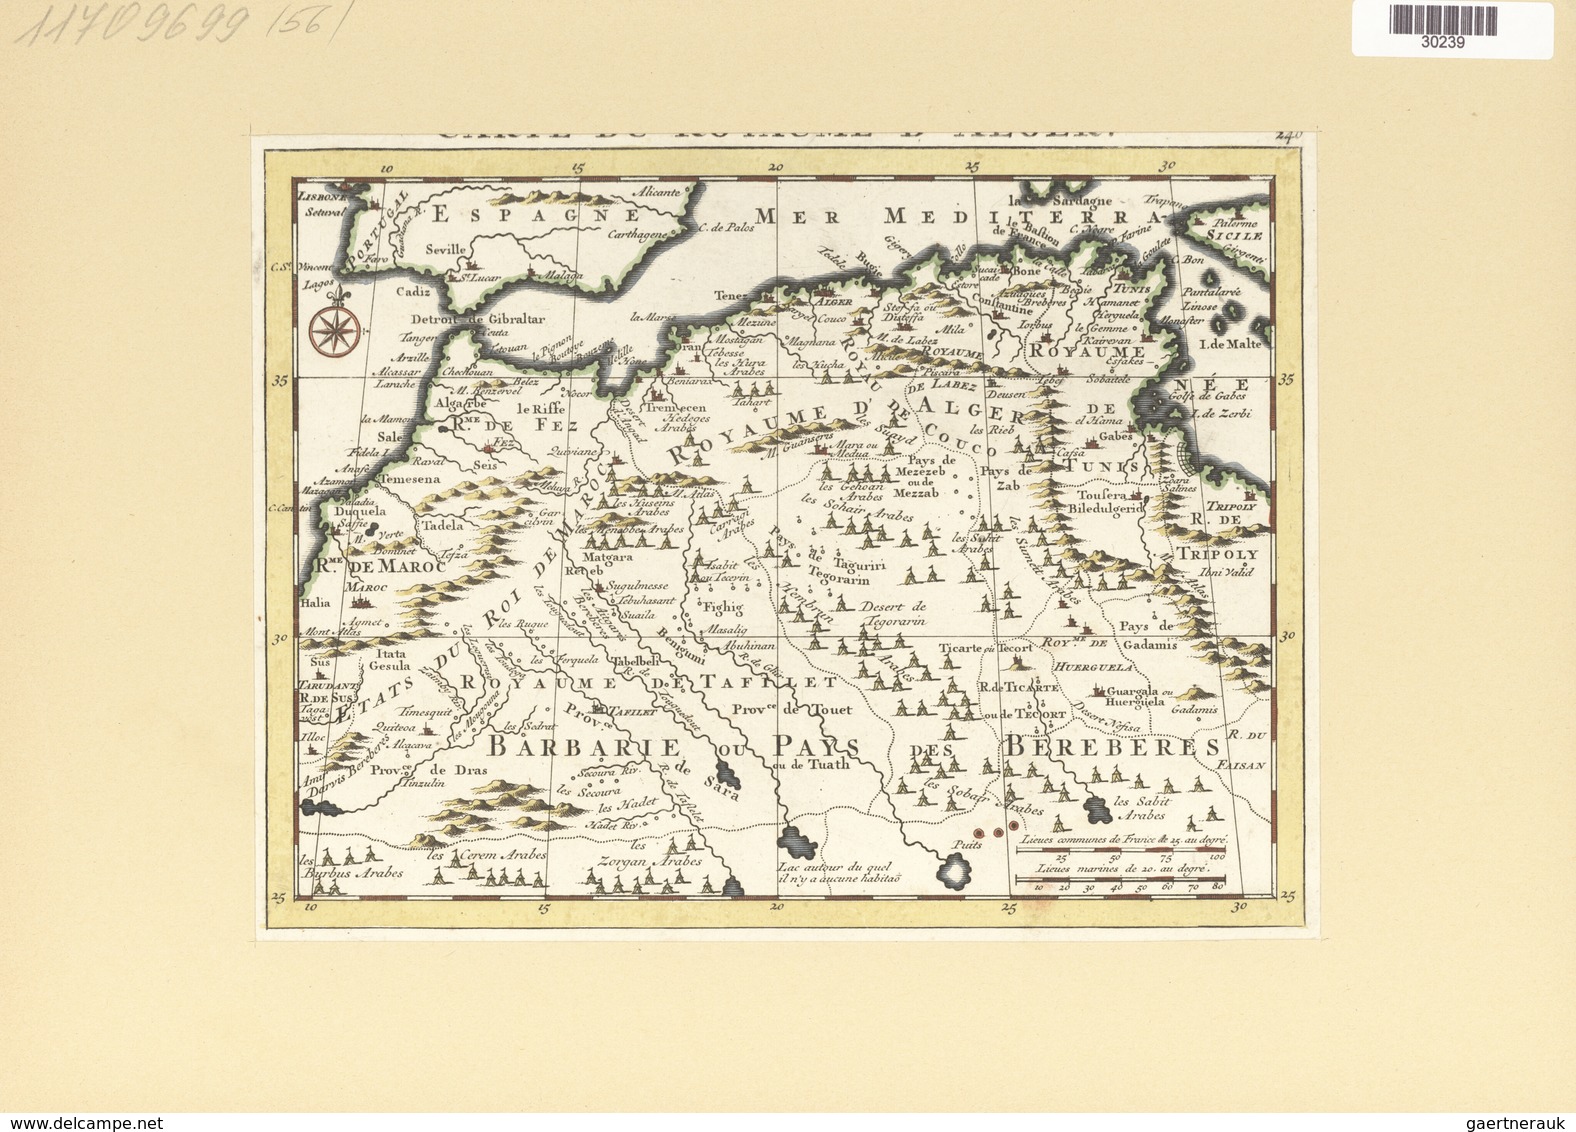 Landkarten Und Stiche: 1734. Carte Du Royaume D' Alger, As Published In The Mercator Atlas Minor 173 - Geographie